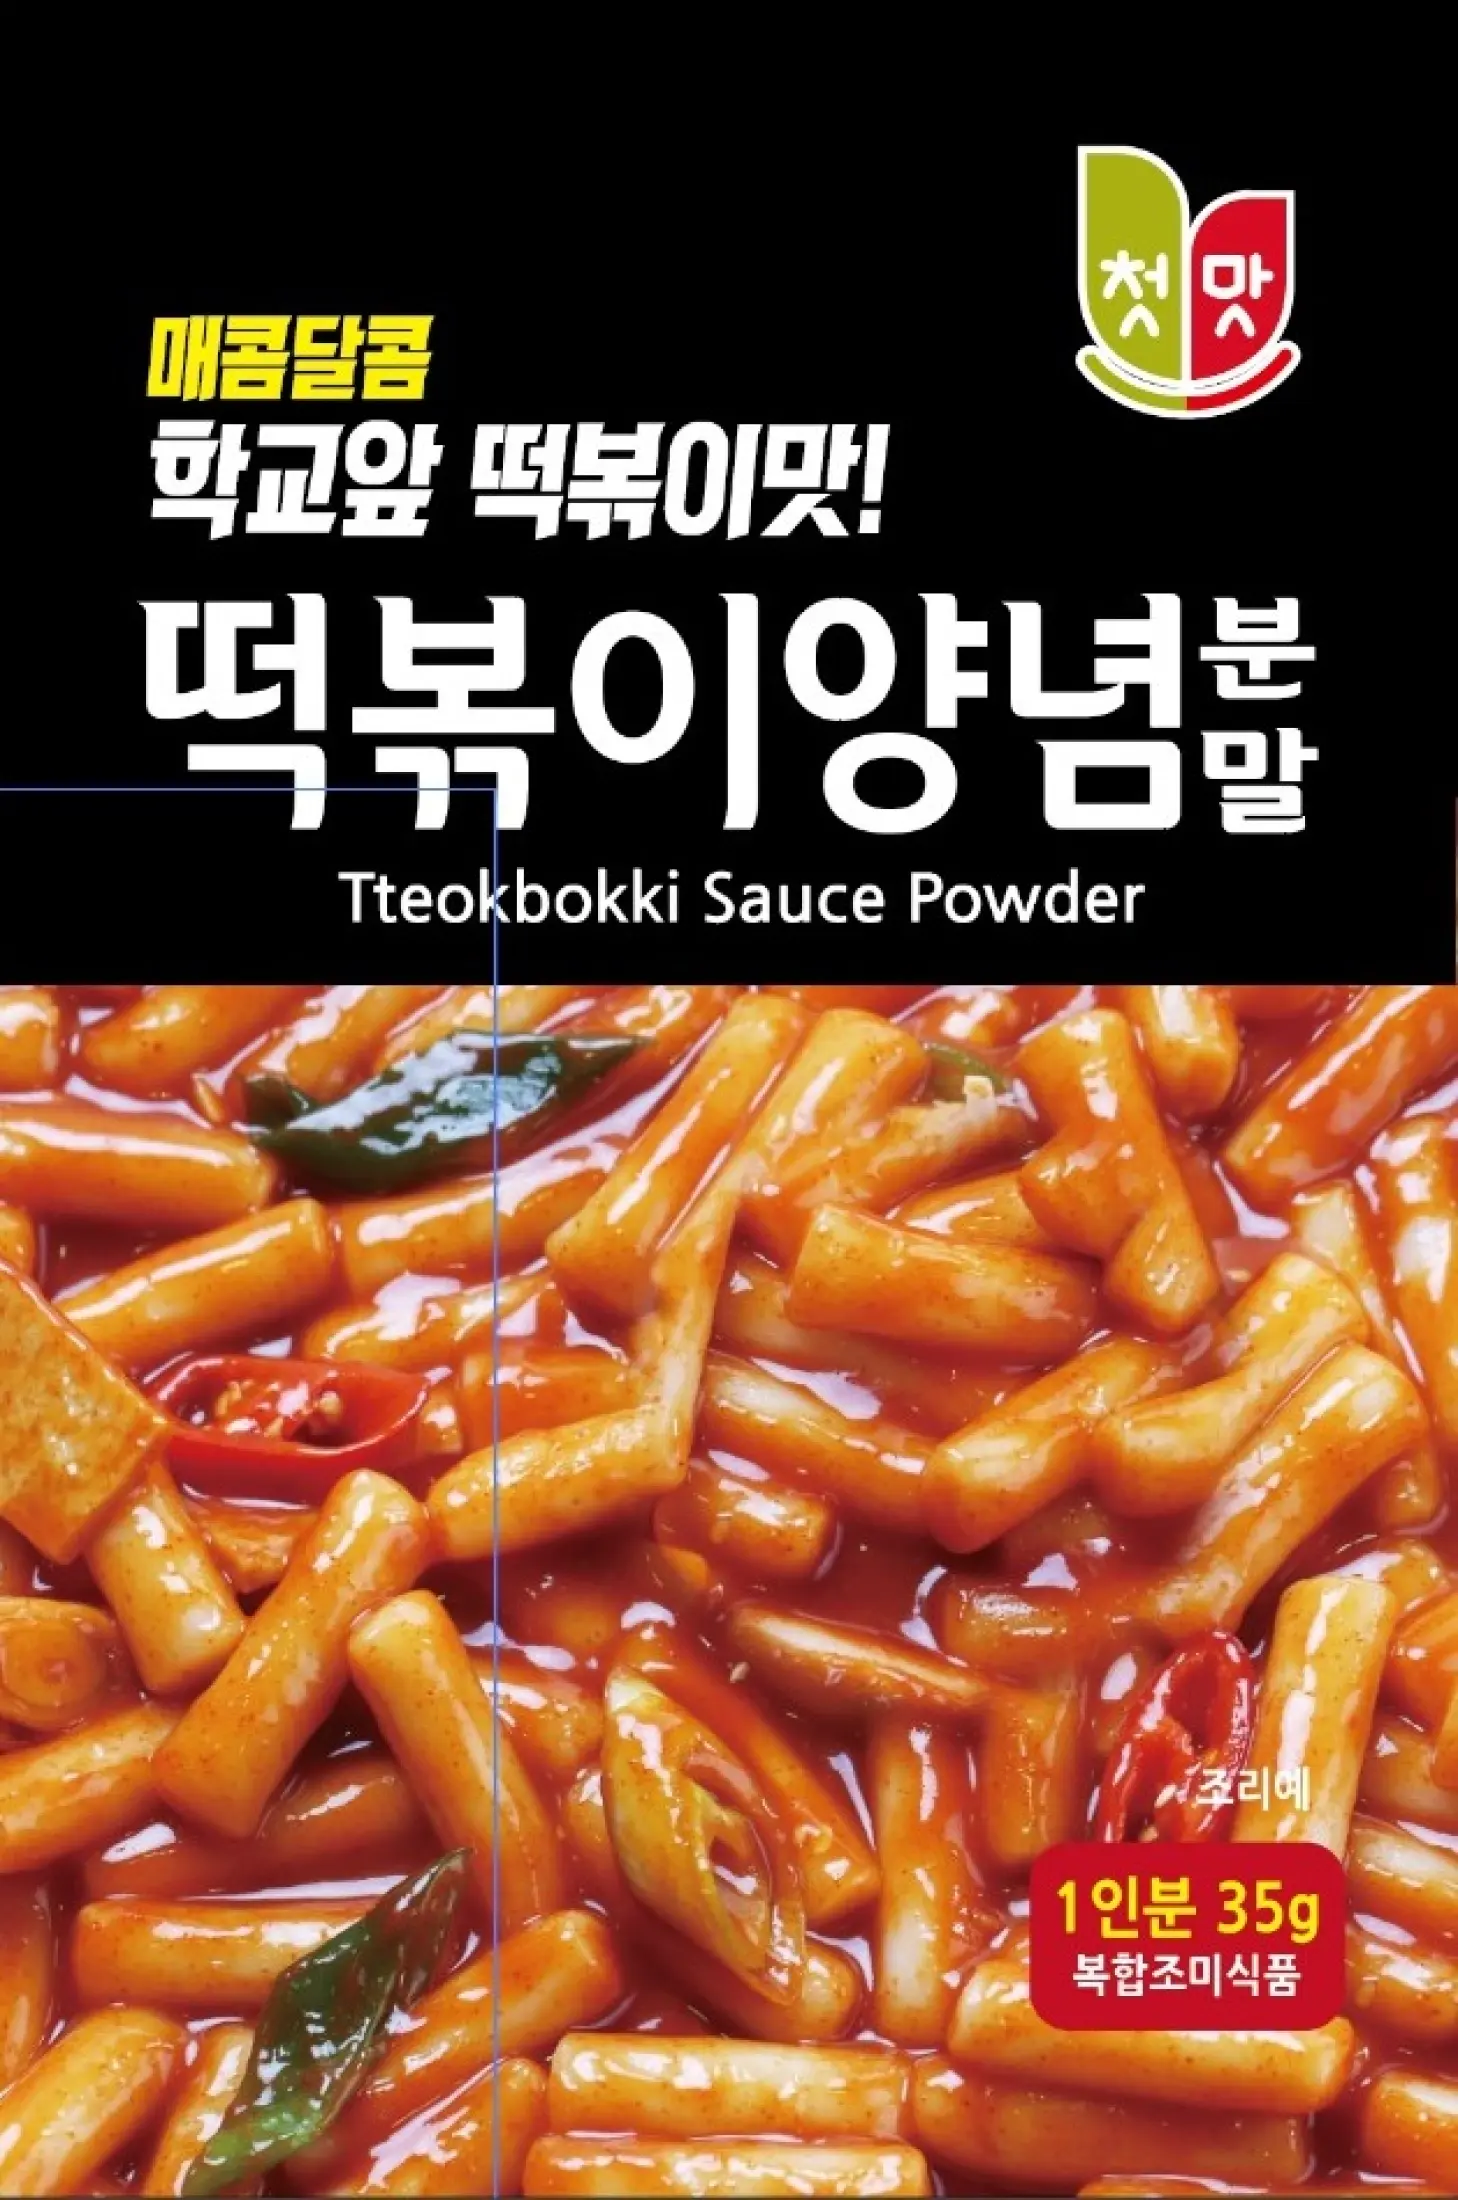 Tteokbokki Powder Mild Chungwoo Korean Food 35g Lazada Ph